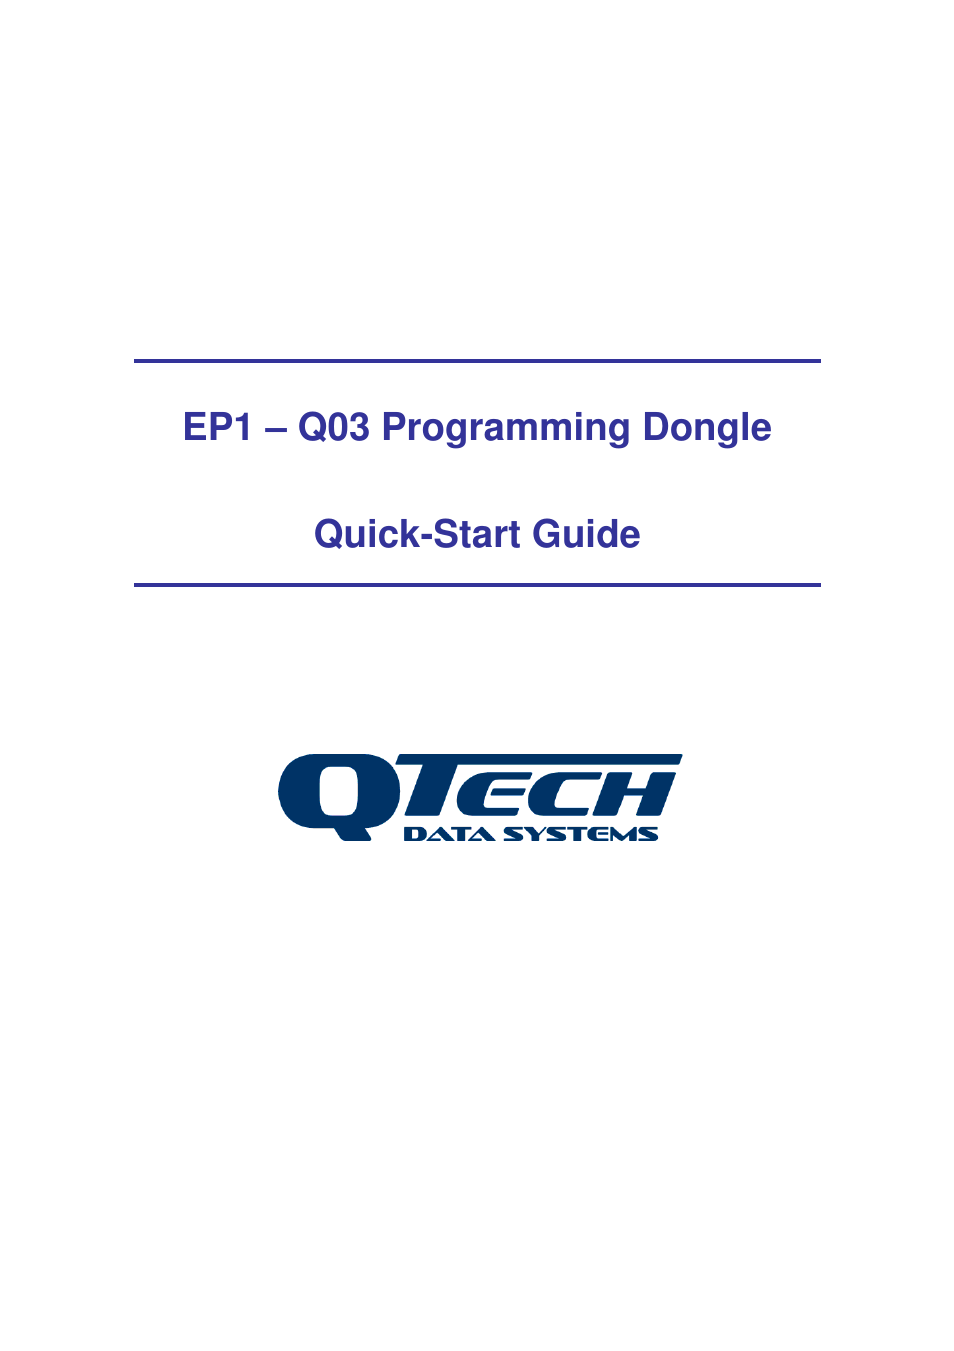 EP1 Q03 Programming Dongle